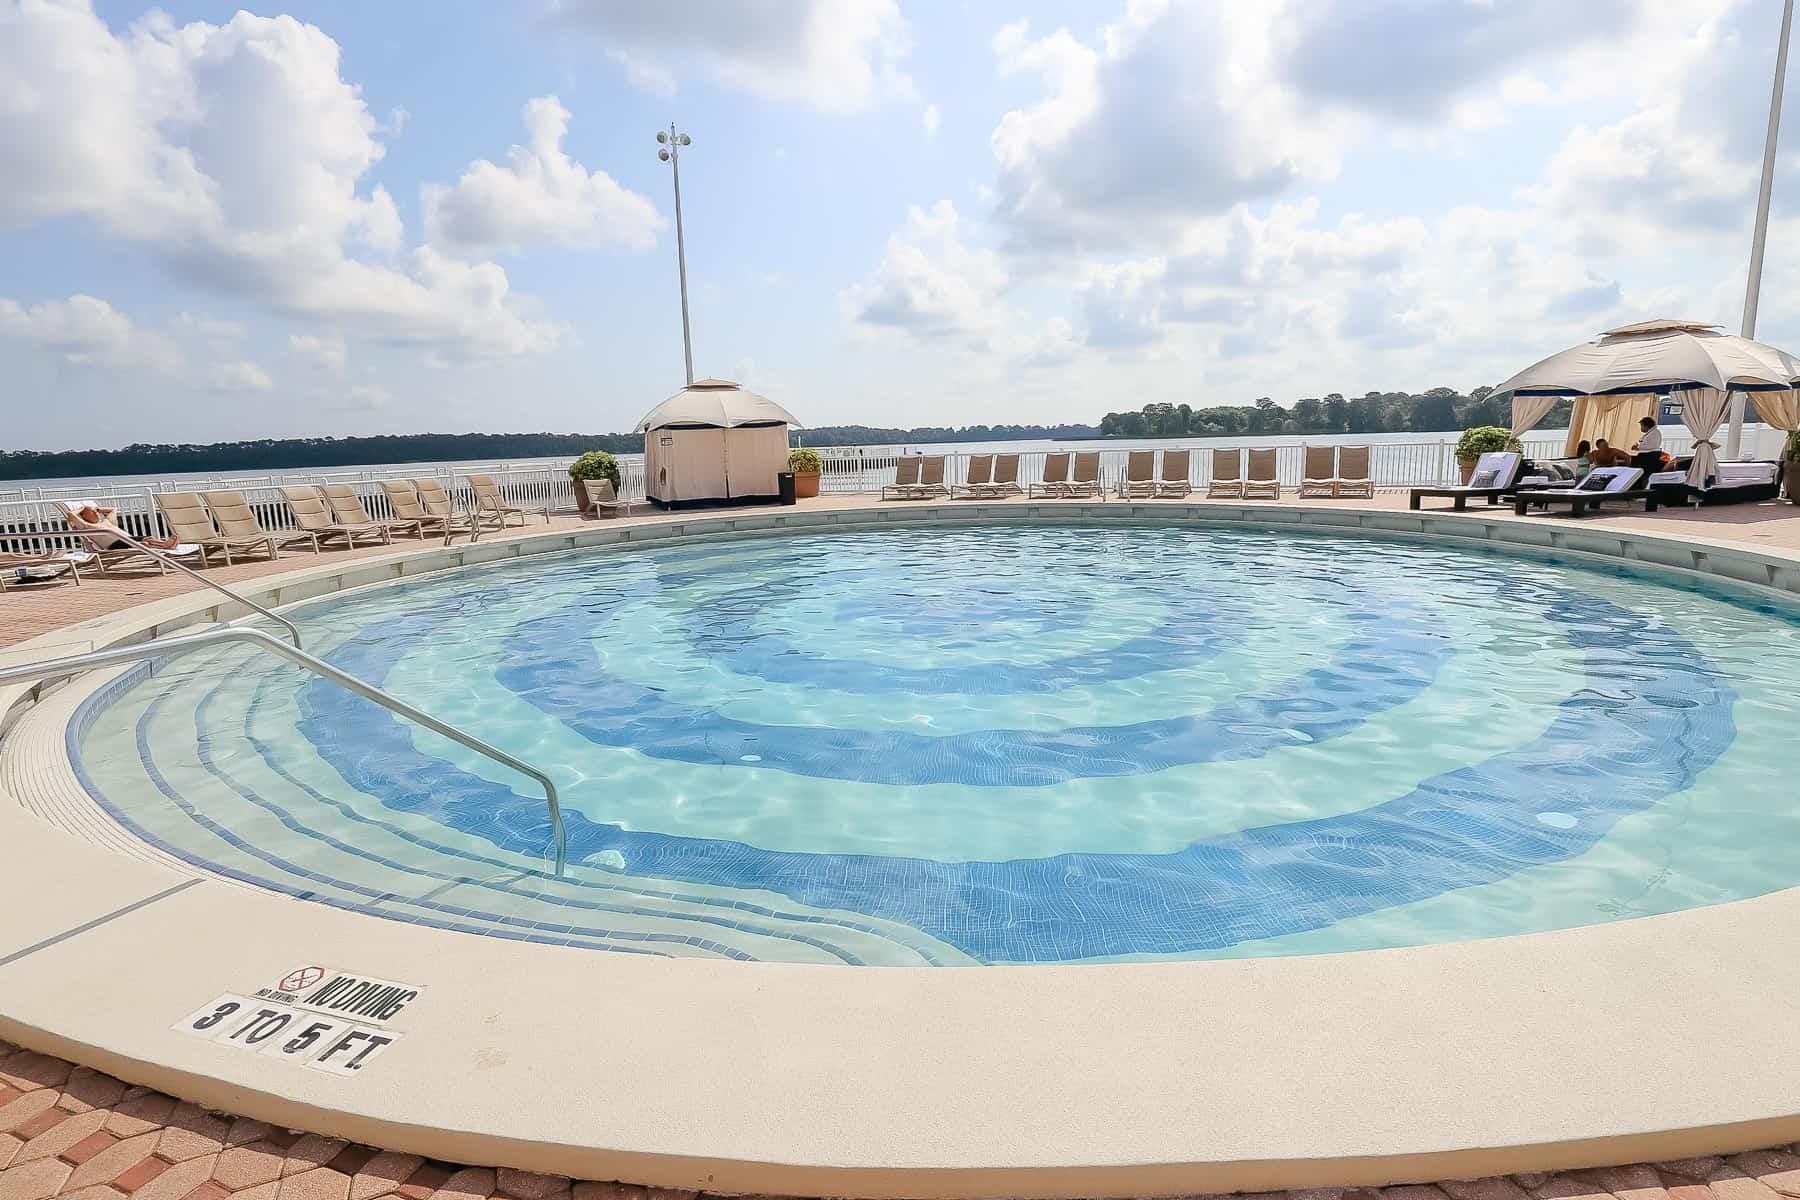 The pool that sits on Bay Lake at Disney World. 